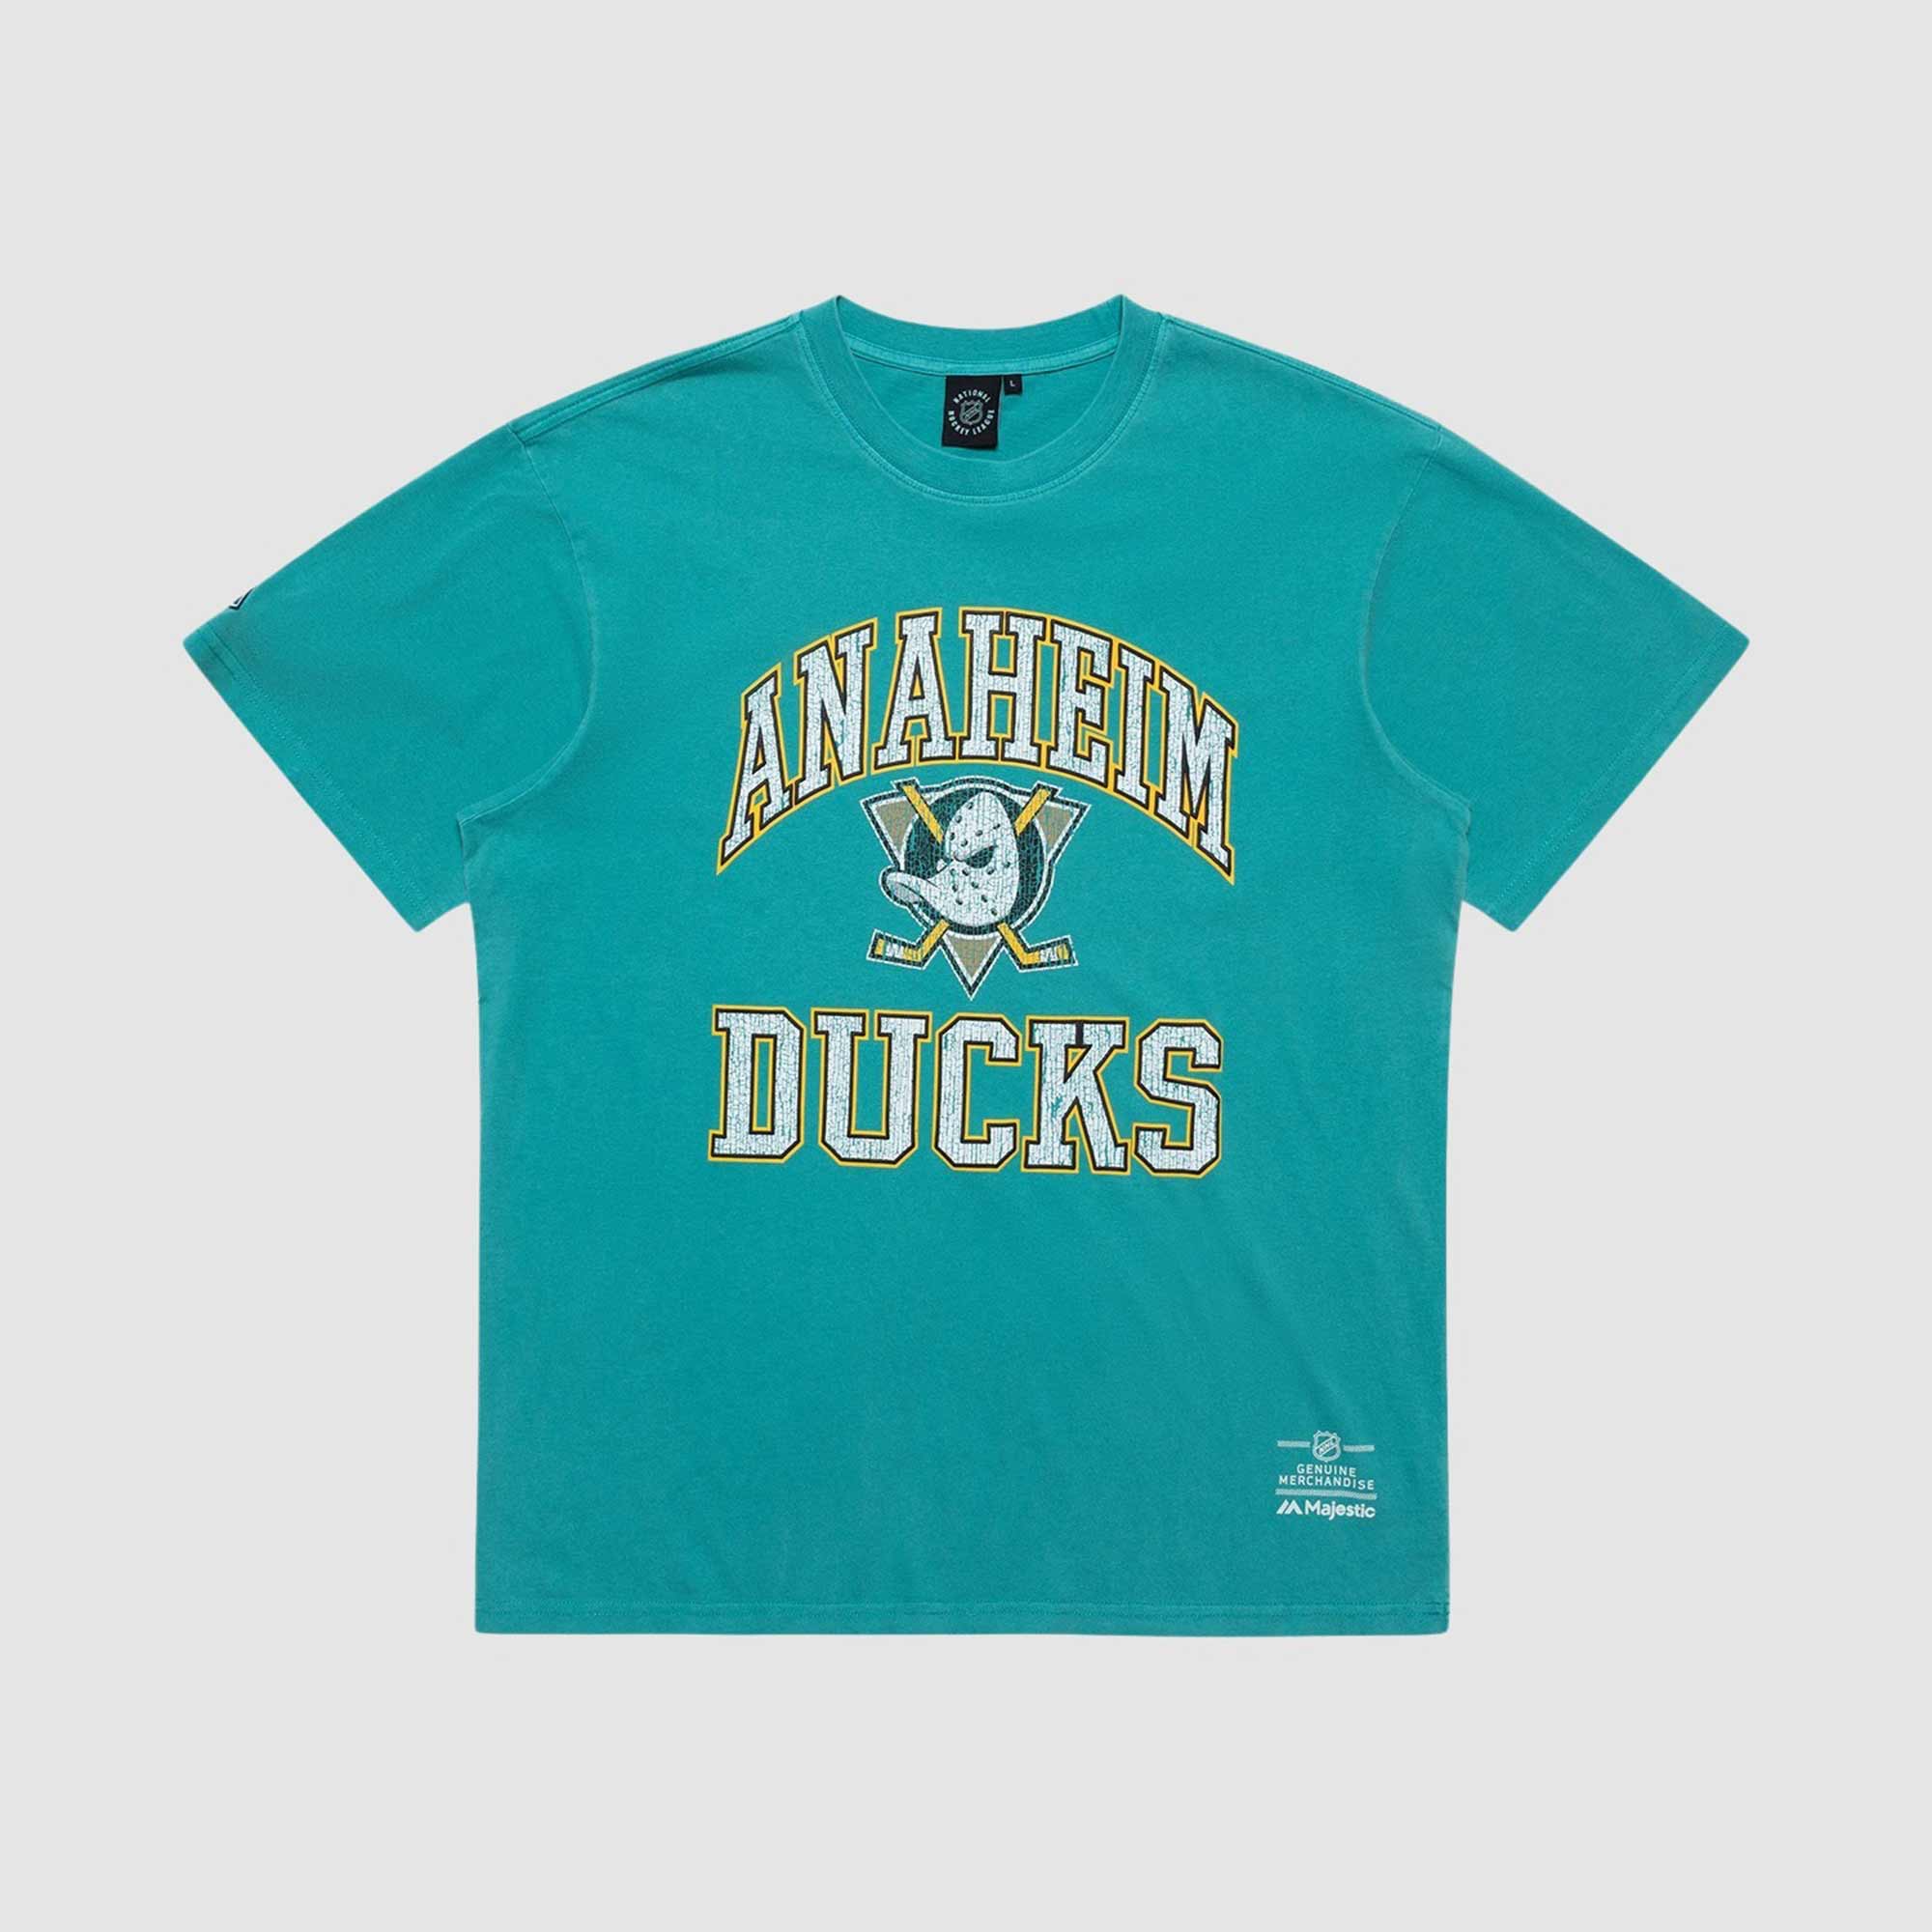 Anaheim T-Shirts for Sale